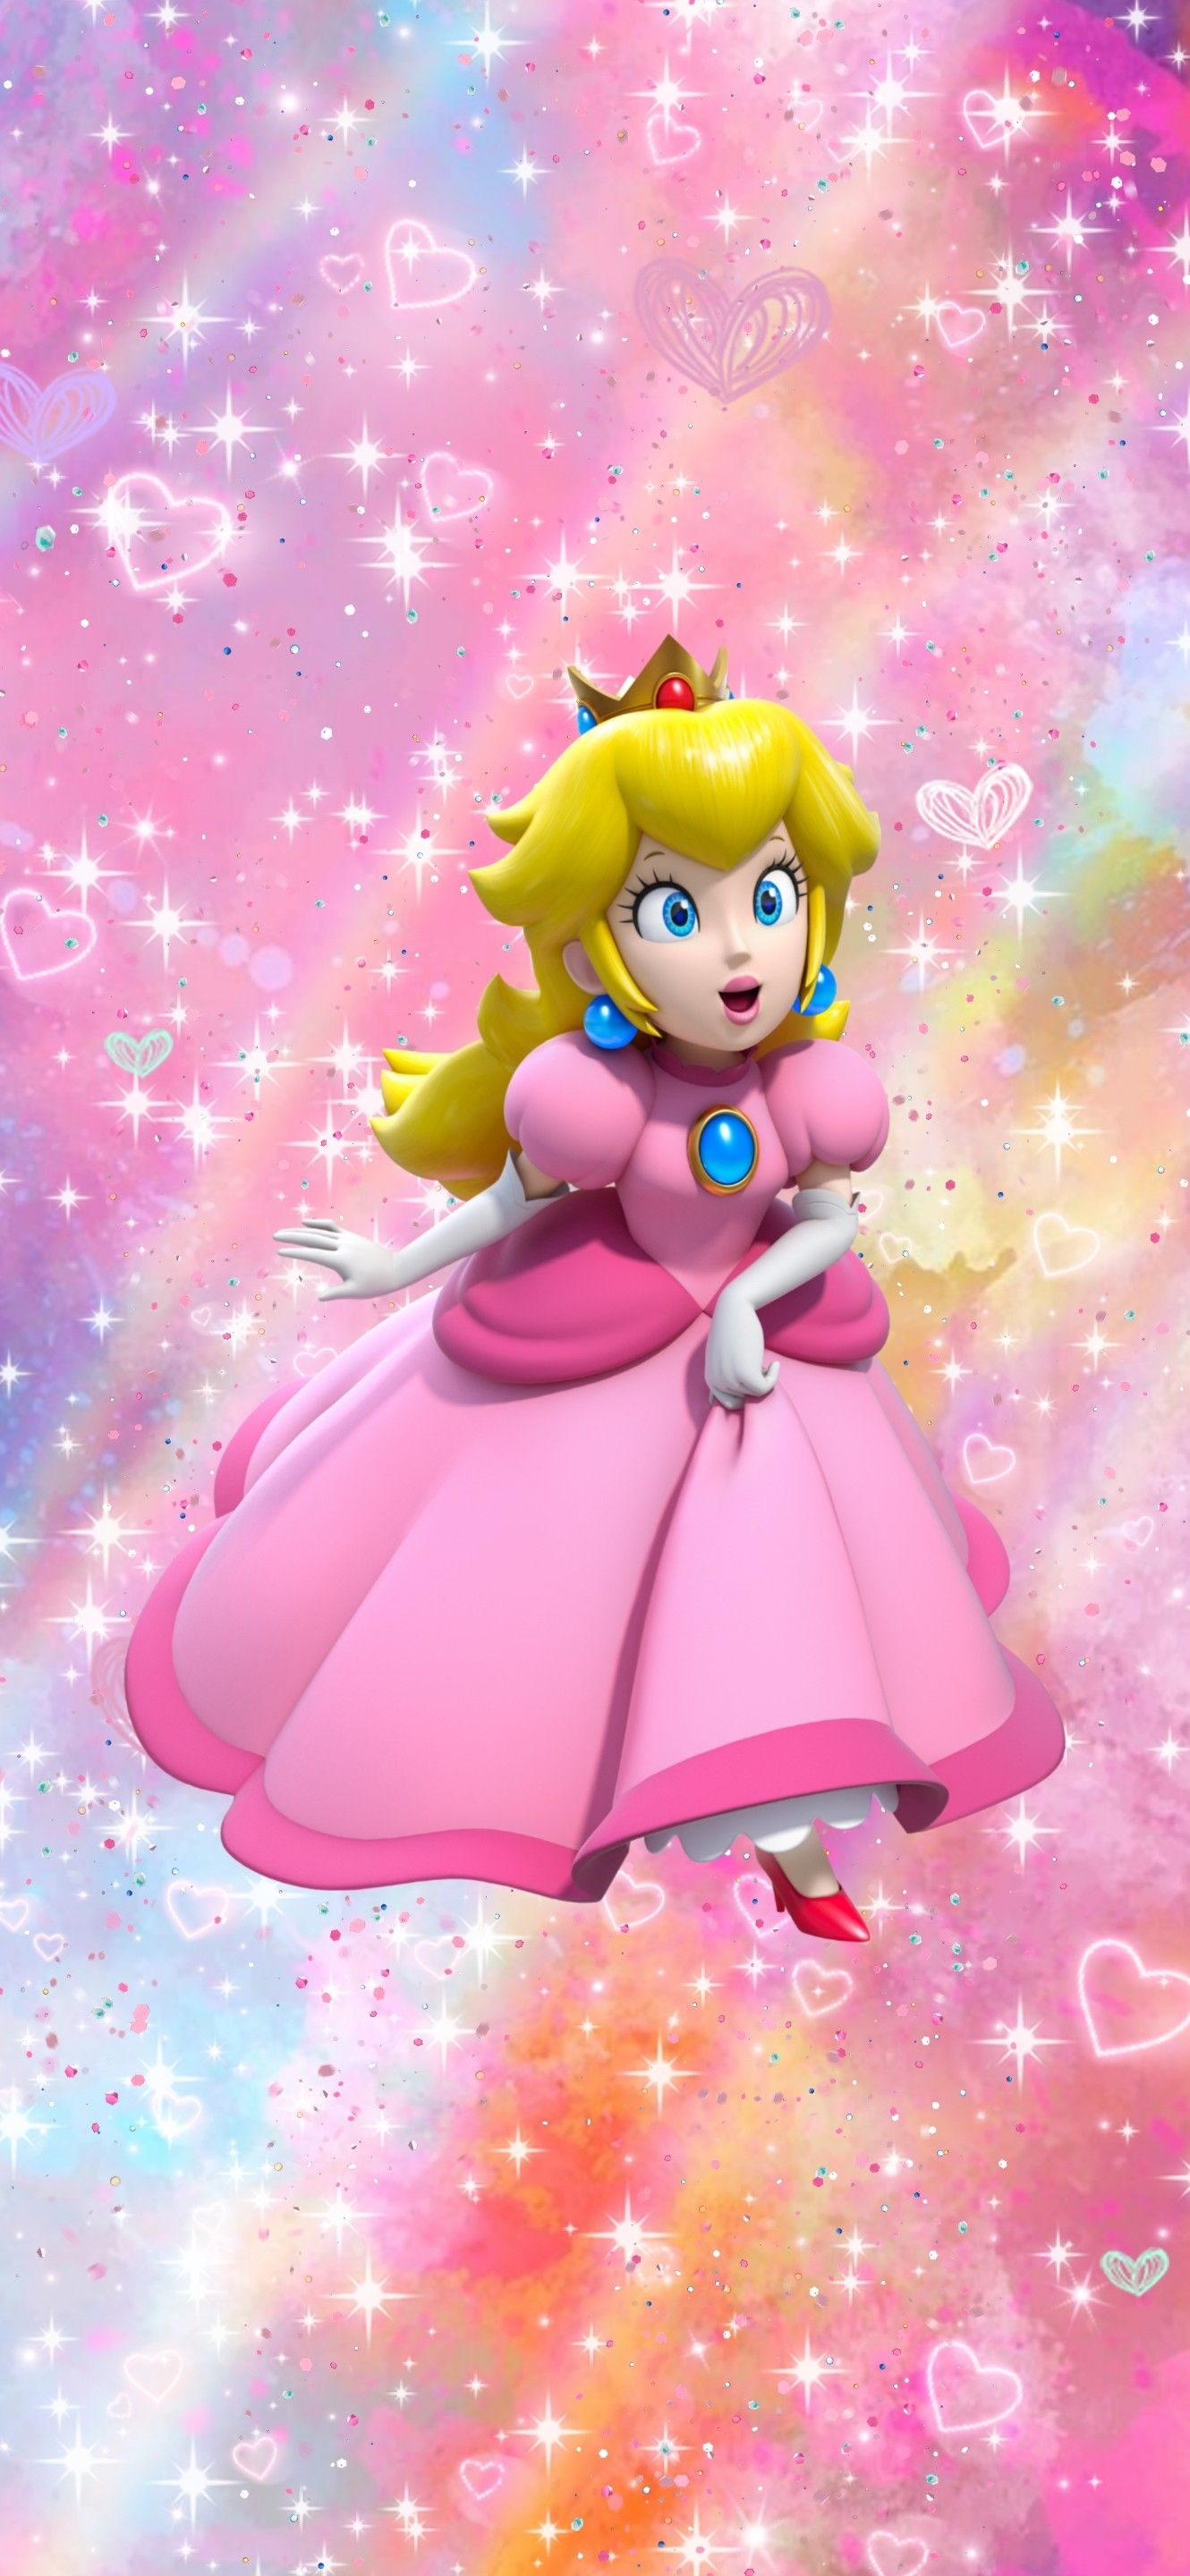 1330x2880 Nintendo Princess Peach aesthetic phone background wallpaper | Nintendo princess, Super princess peach, Princess peach